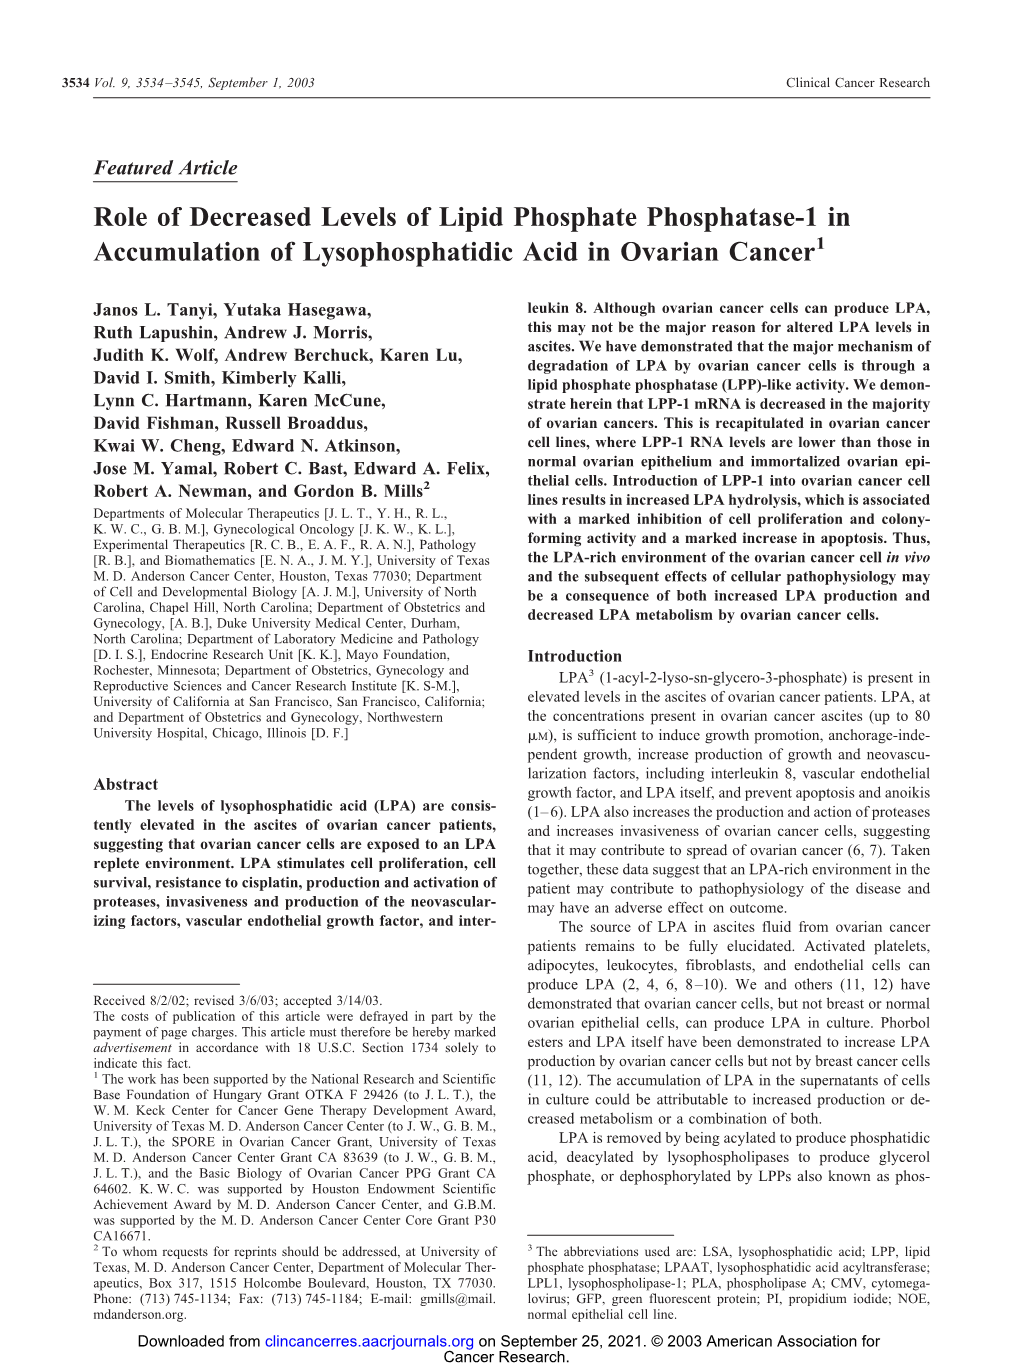 Role of Decreased Levels of Lipid Phosphate Phosphatase-1 in Accumulation of Lysophosphatidic Acid in Ovarian Cancer1